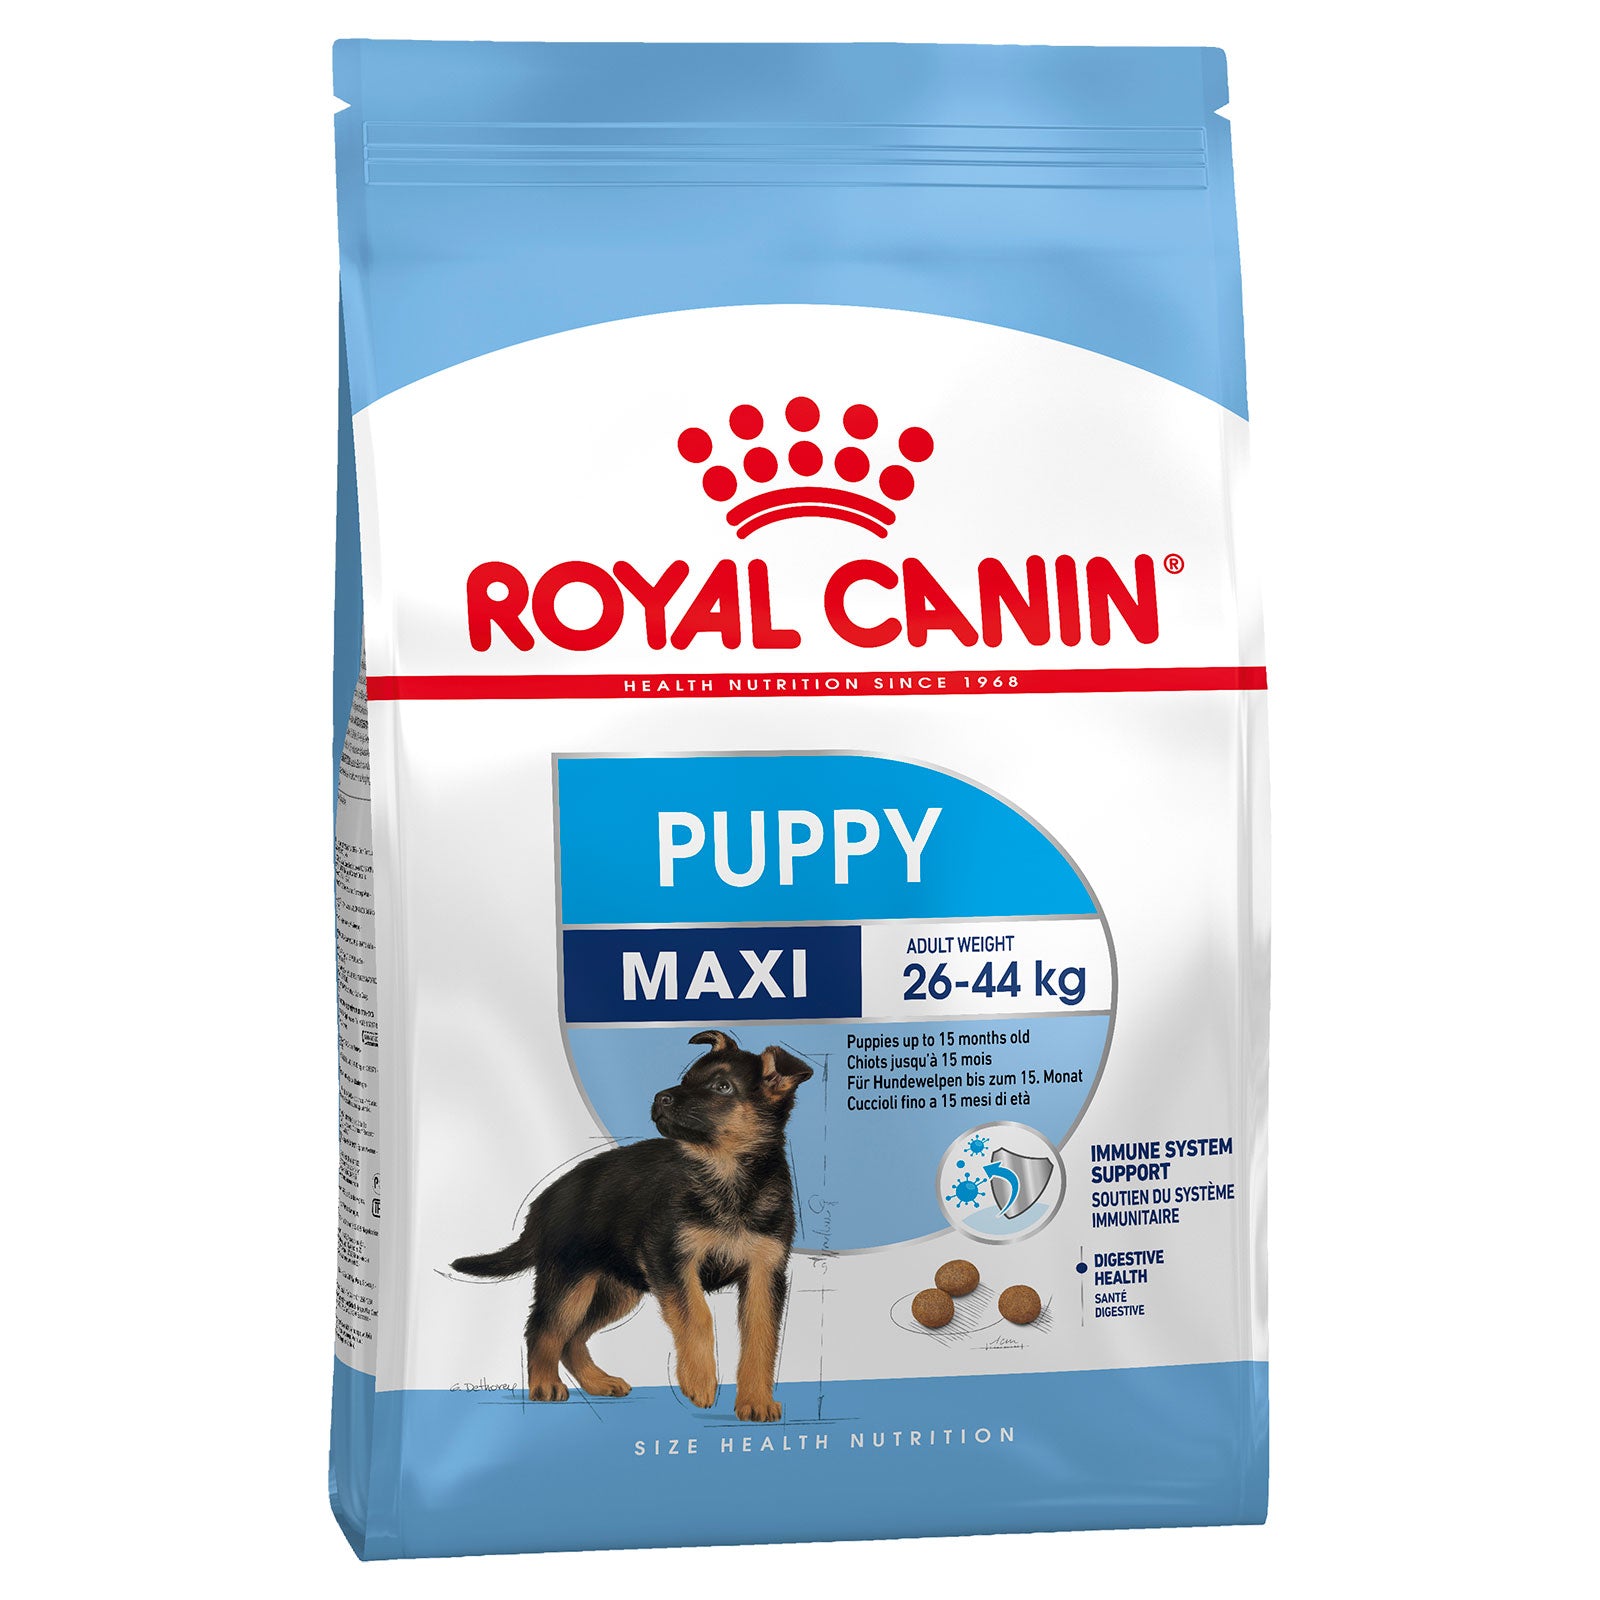 Royal Canin Dog Food Puppy Maxi